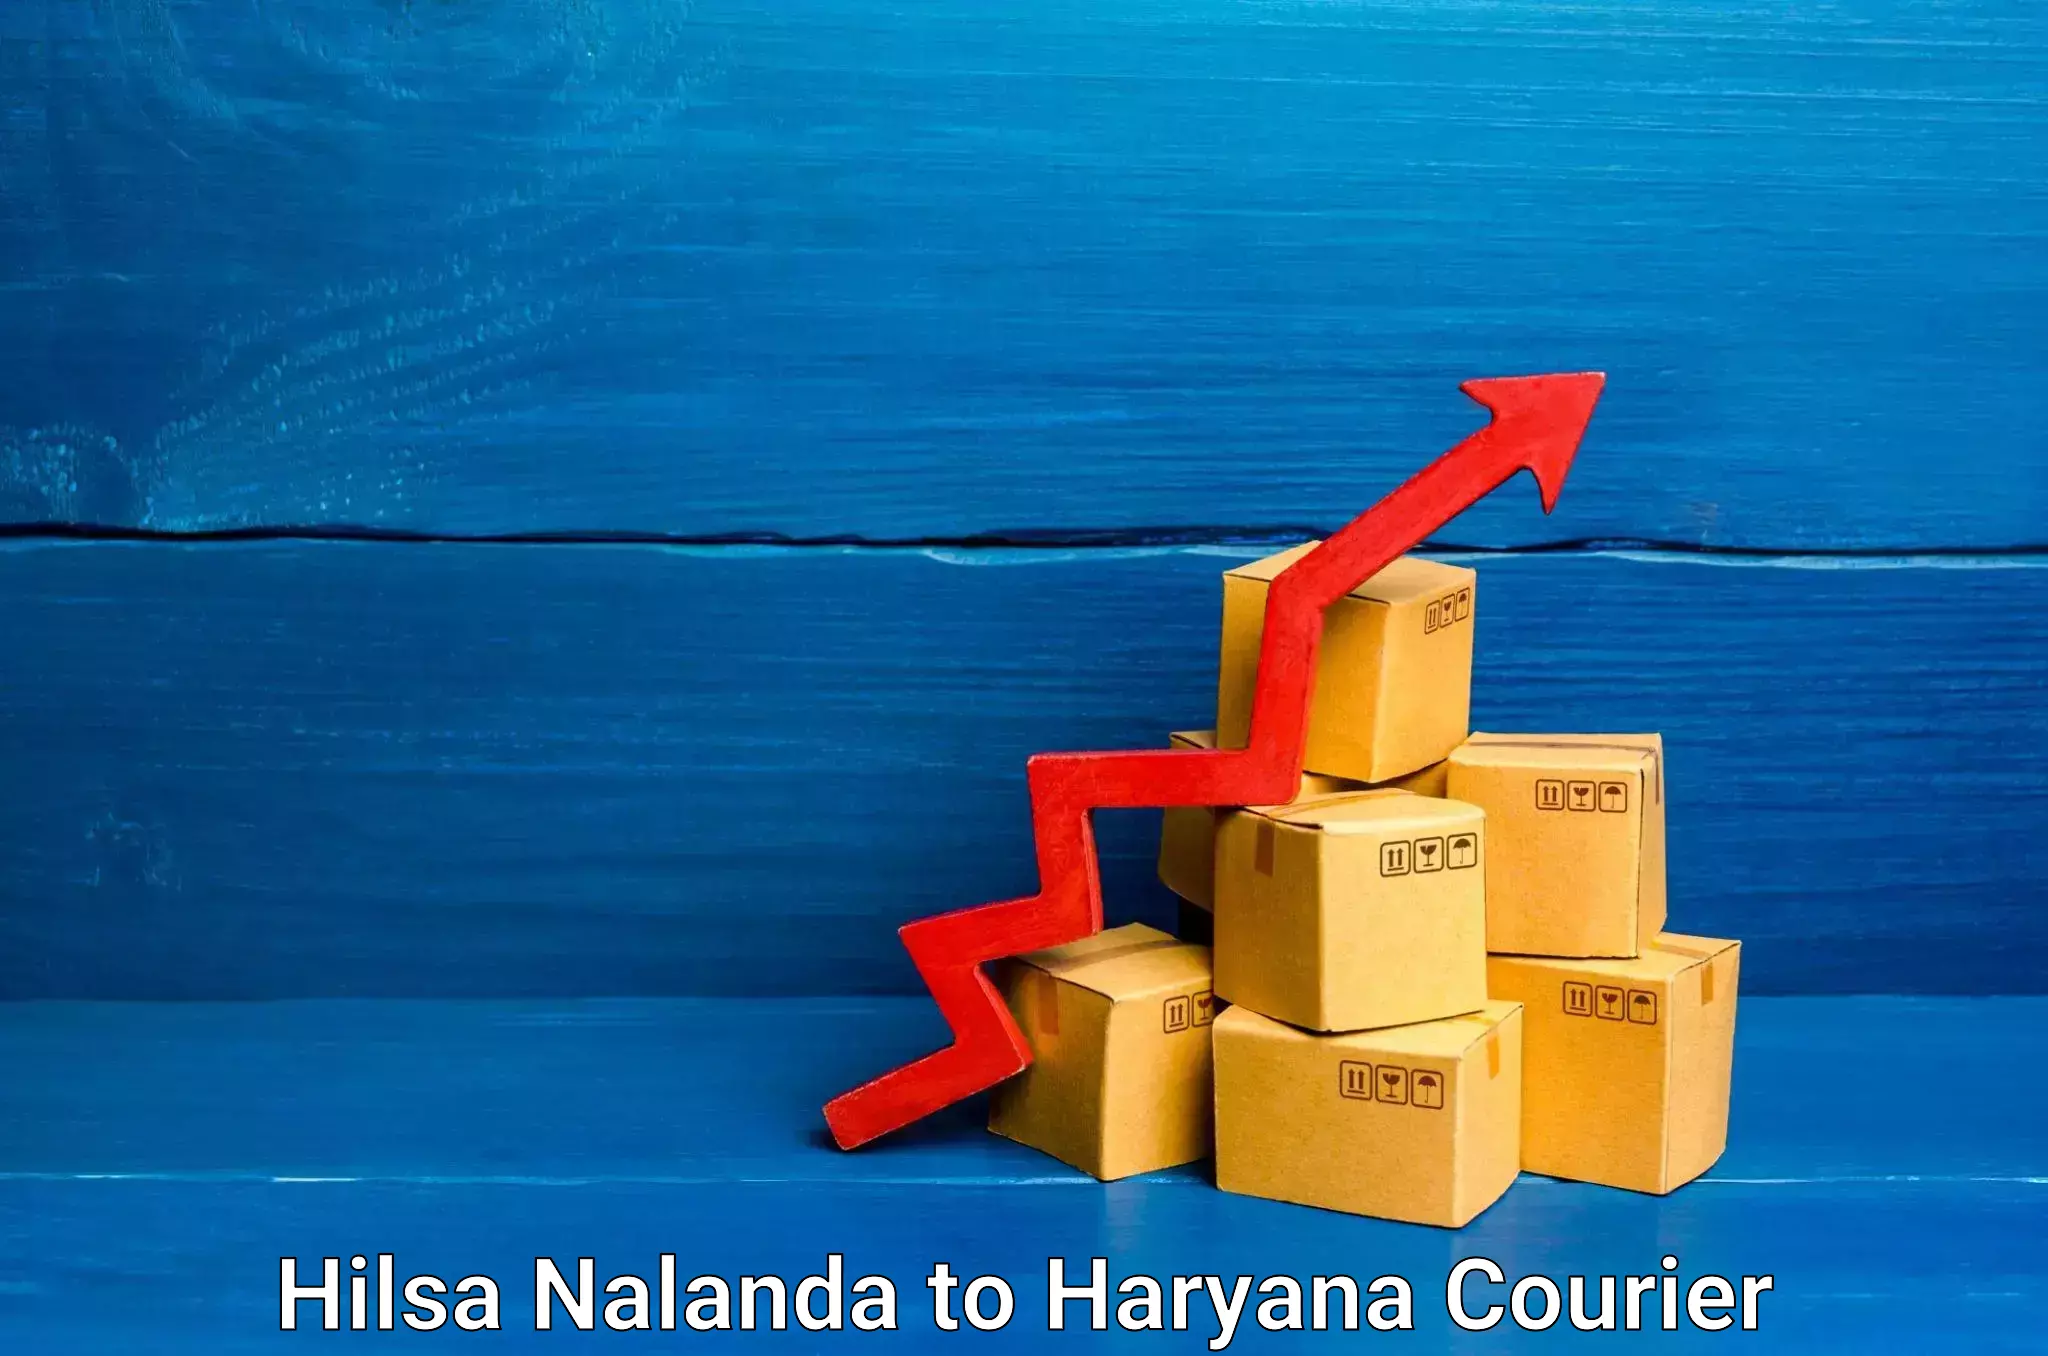 Professional furniture transport in Hilsa Nalanda to Haryana